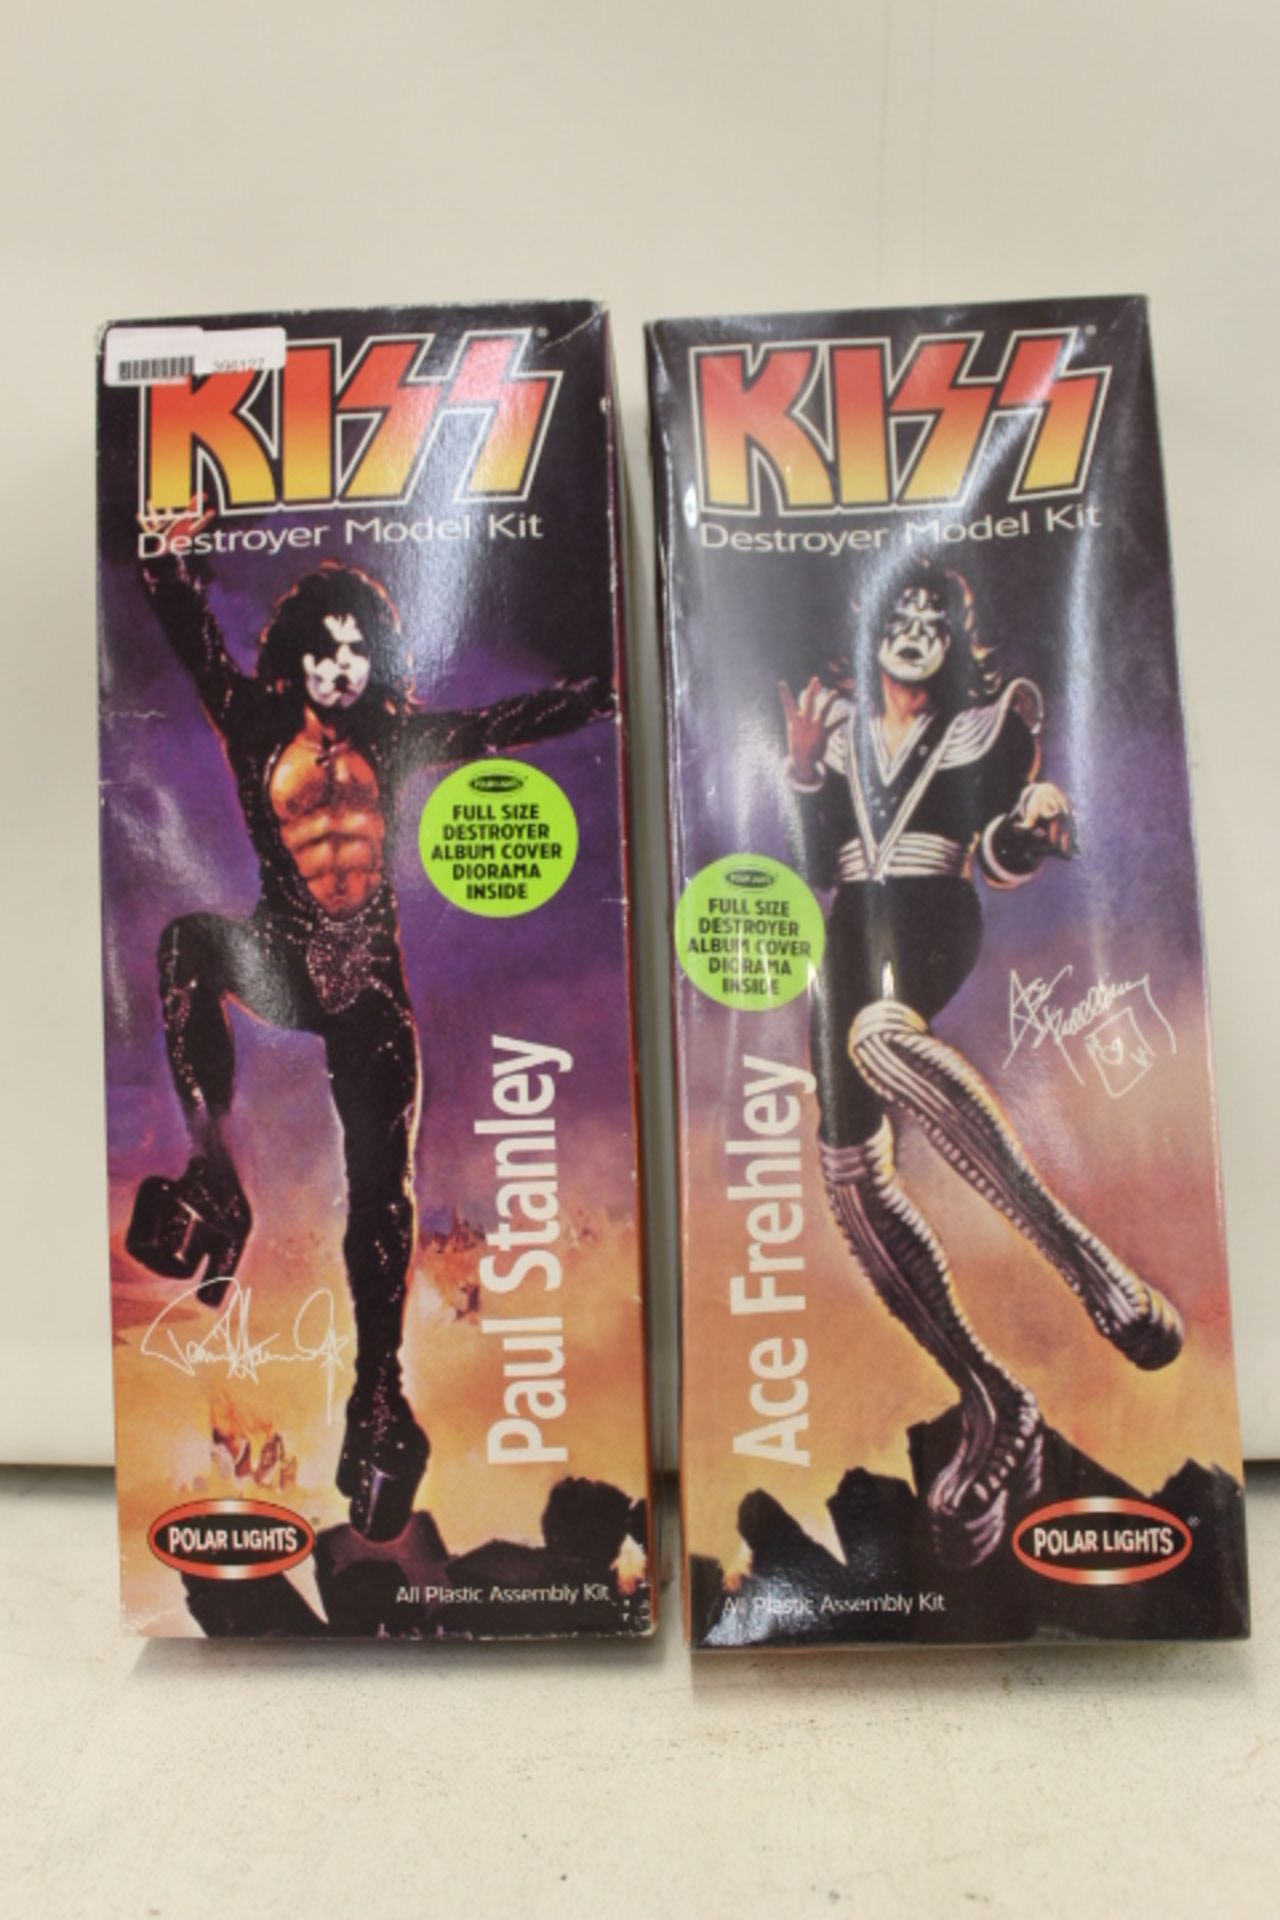 Two Kiss Model Kits